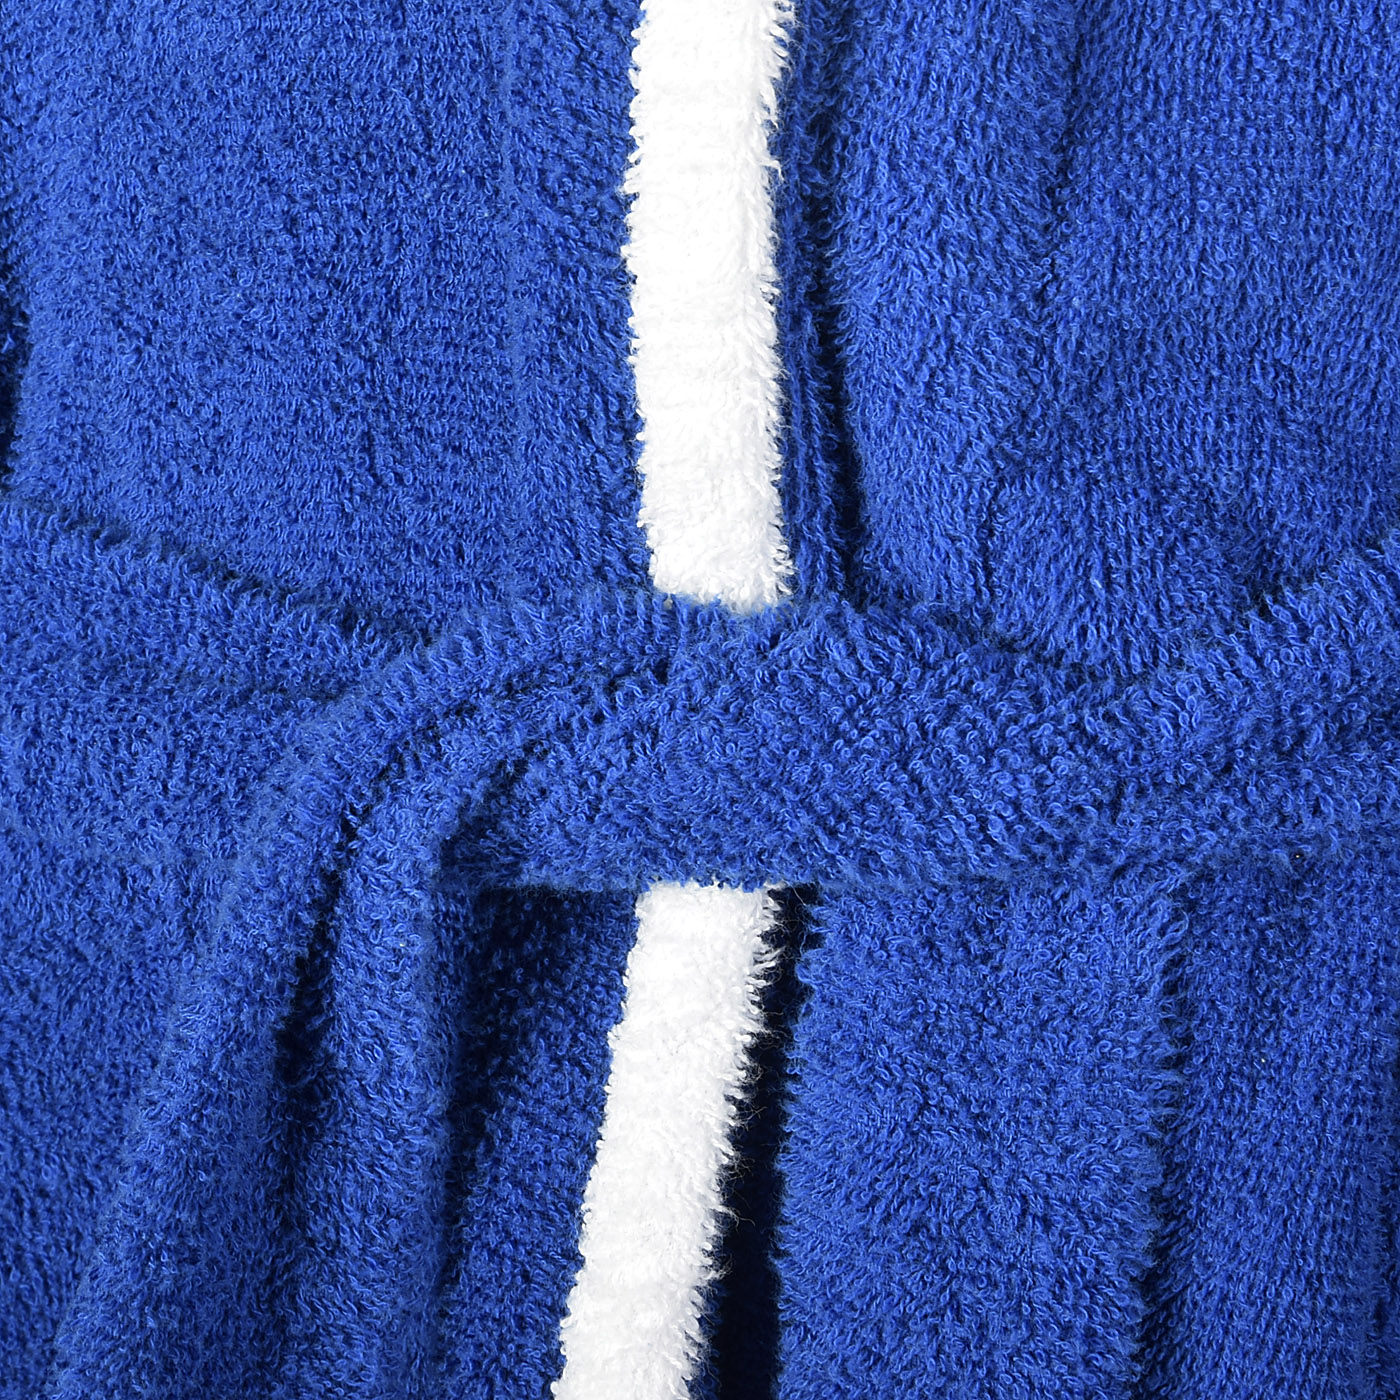 1960s Mens Blue Terry Cloth Robe